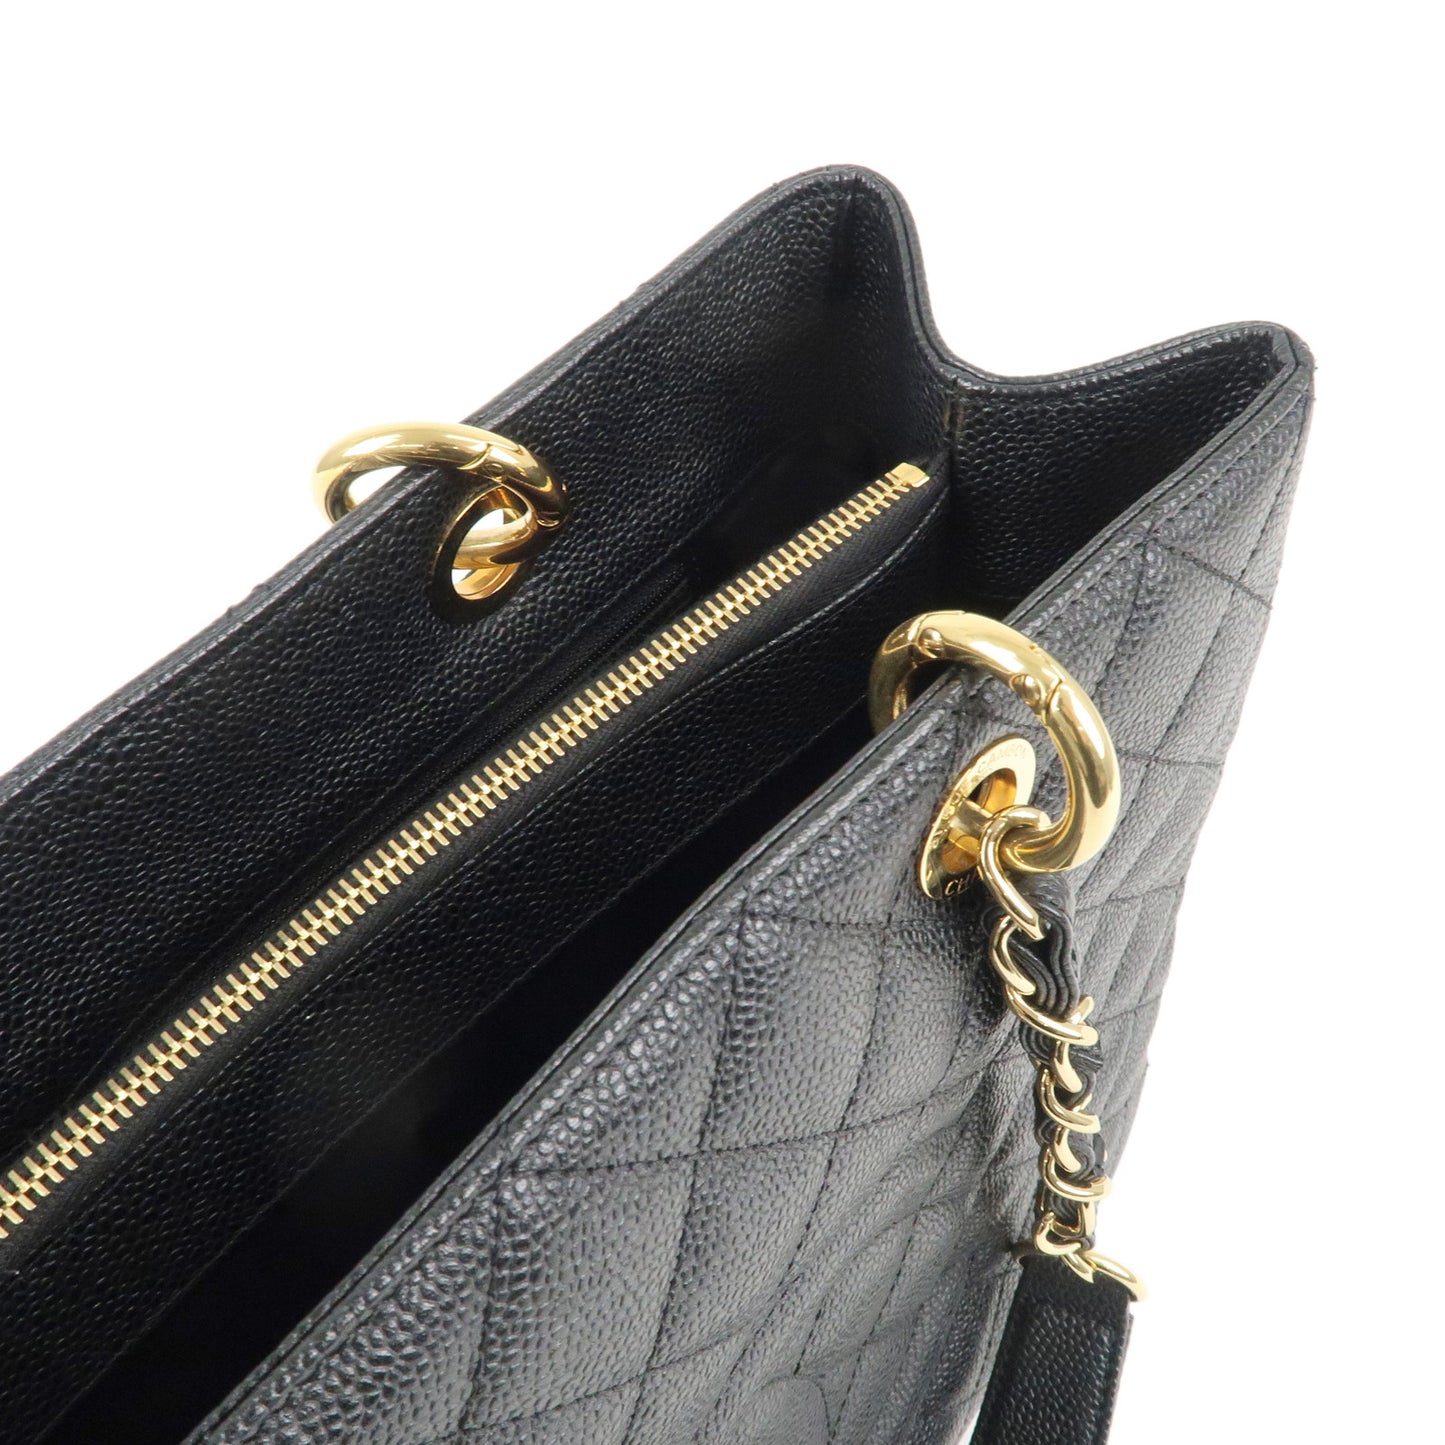 CHANEL Matelasse Caviar Skin GST Chain Tote Bag Black Gold A50995